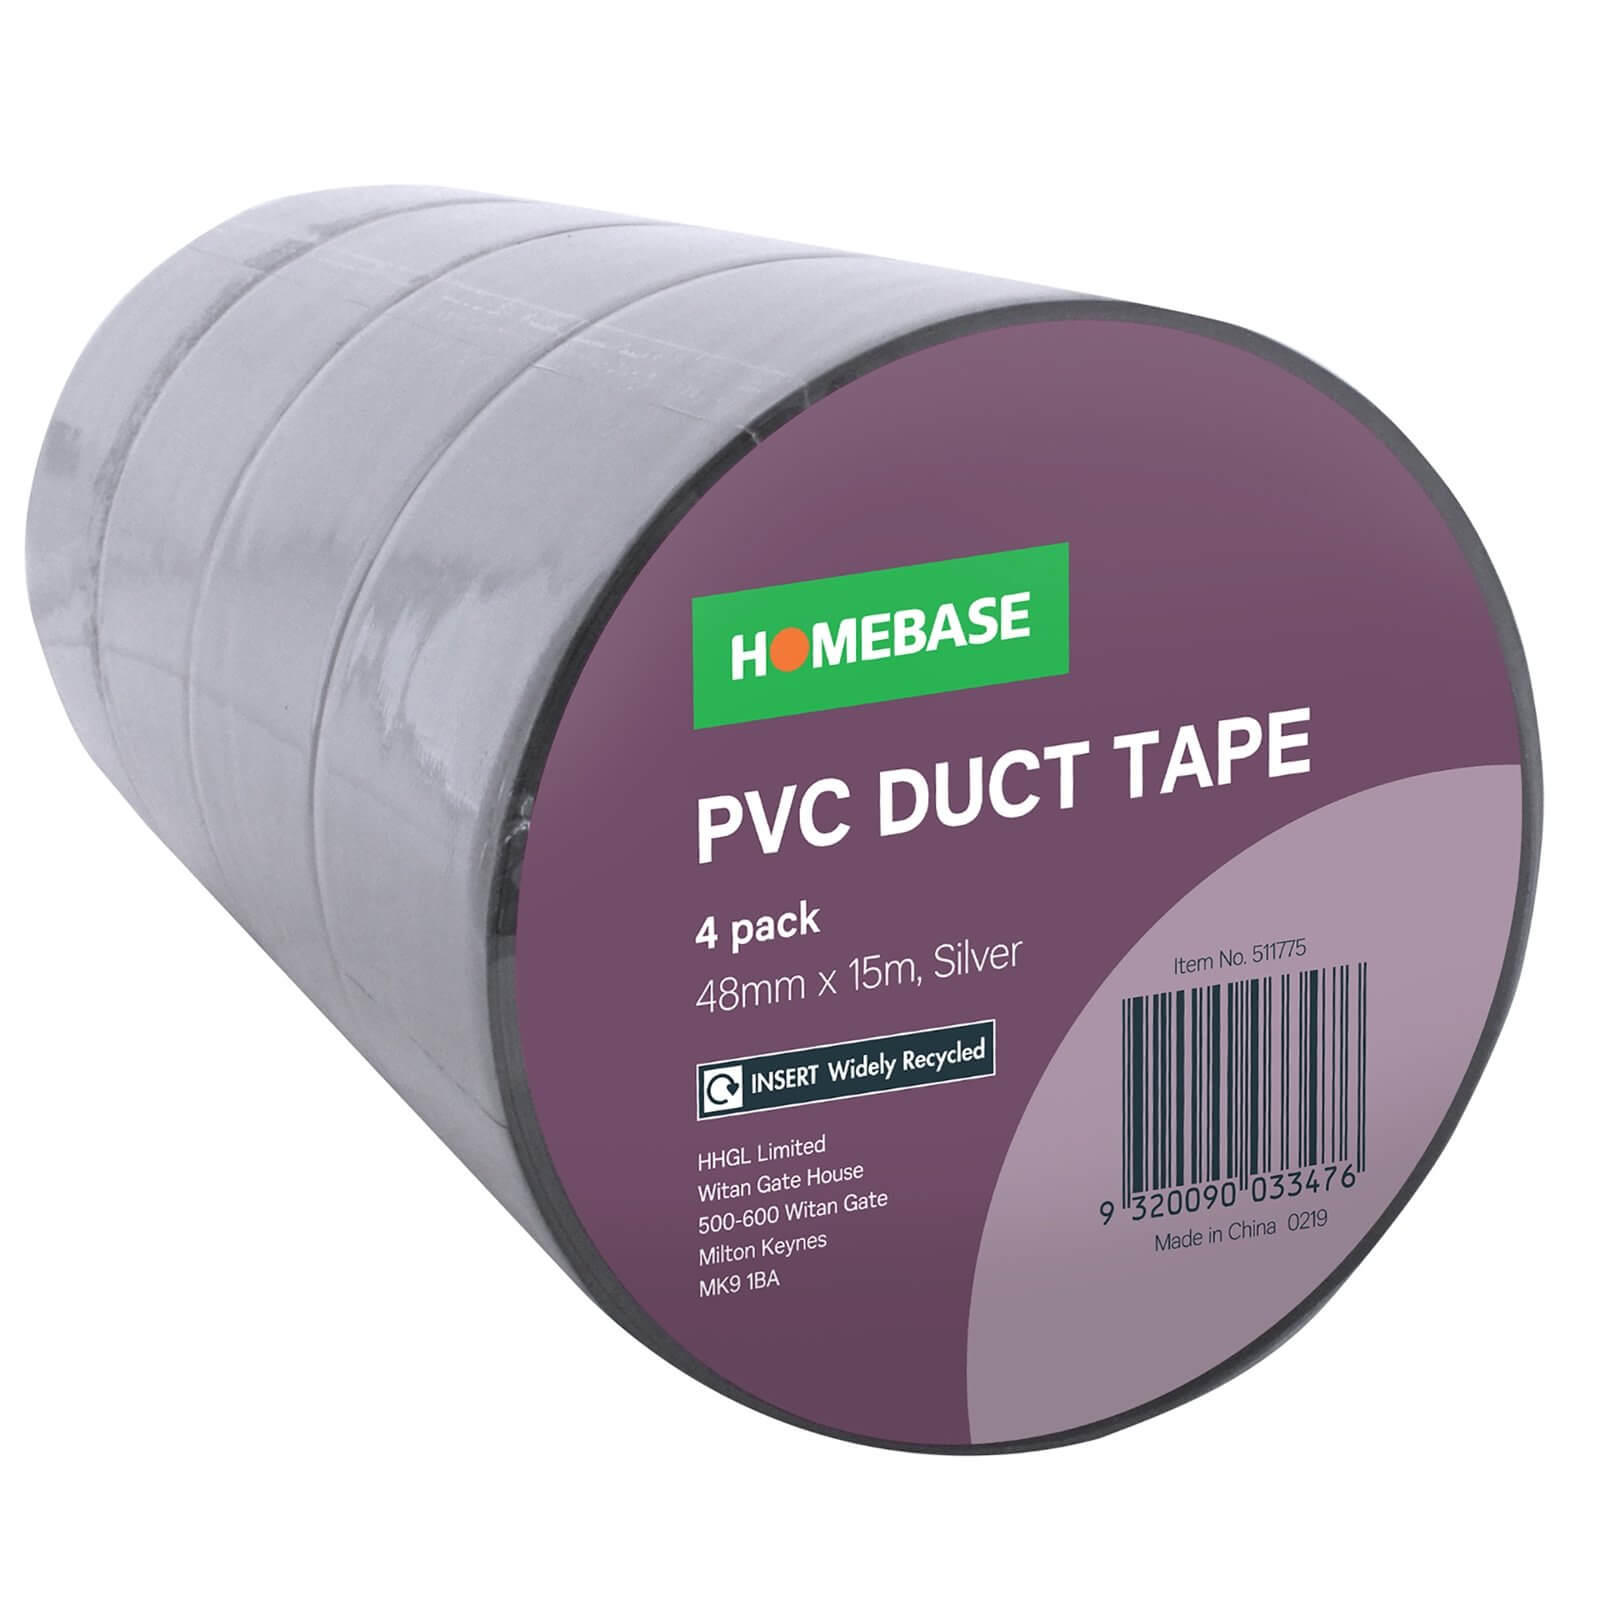 Homebase Duct Tape - 4 pack